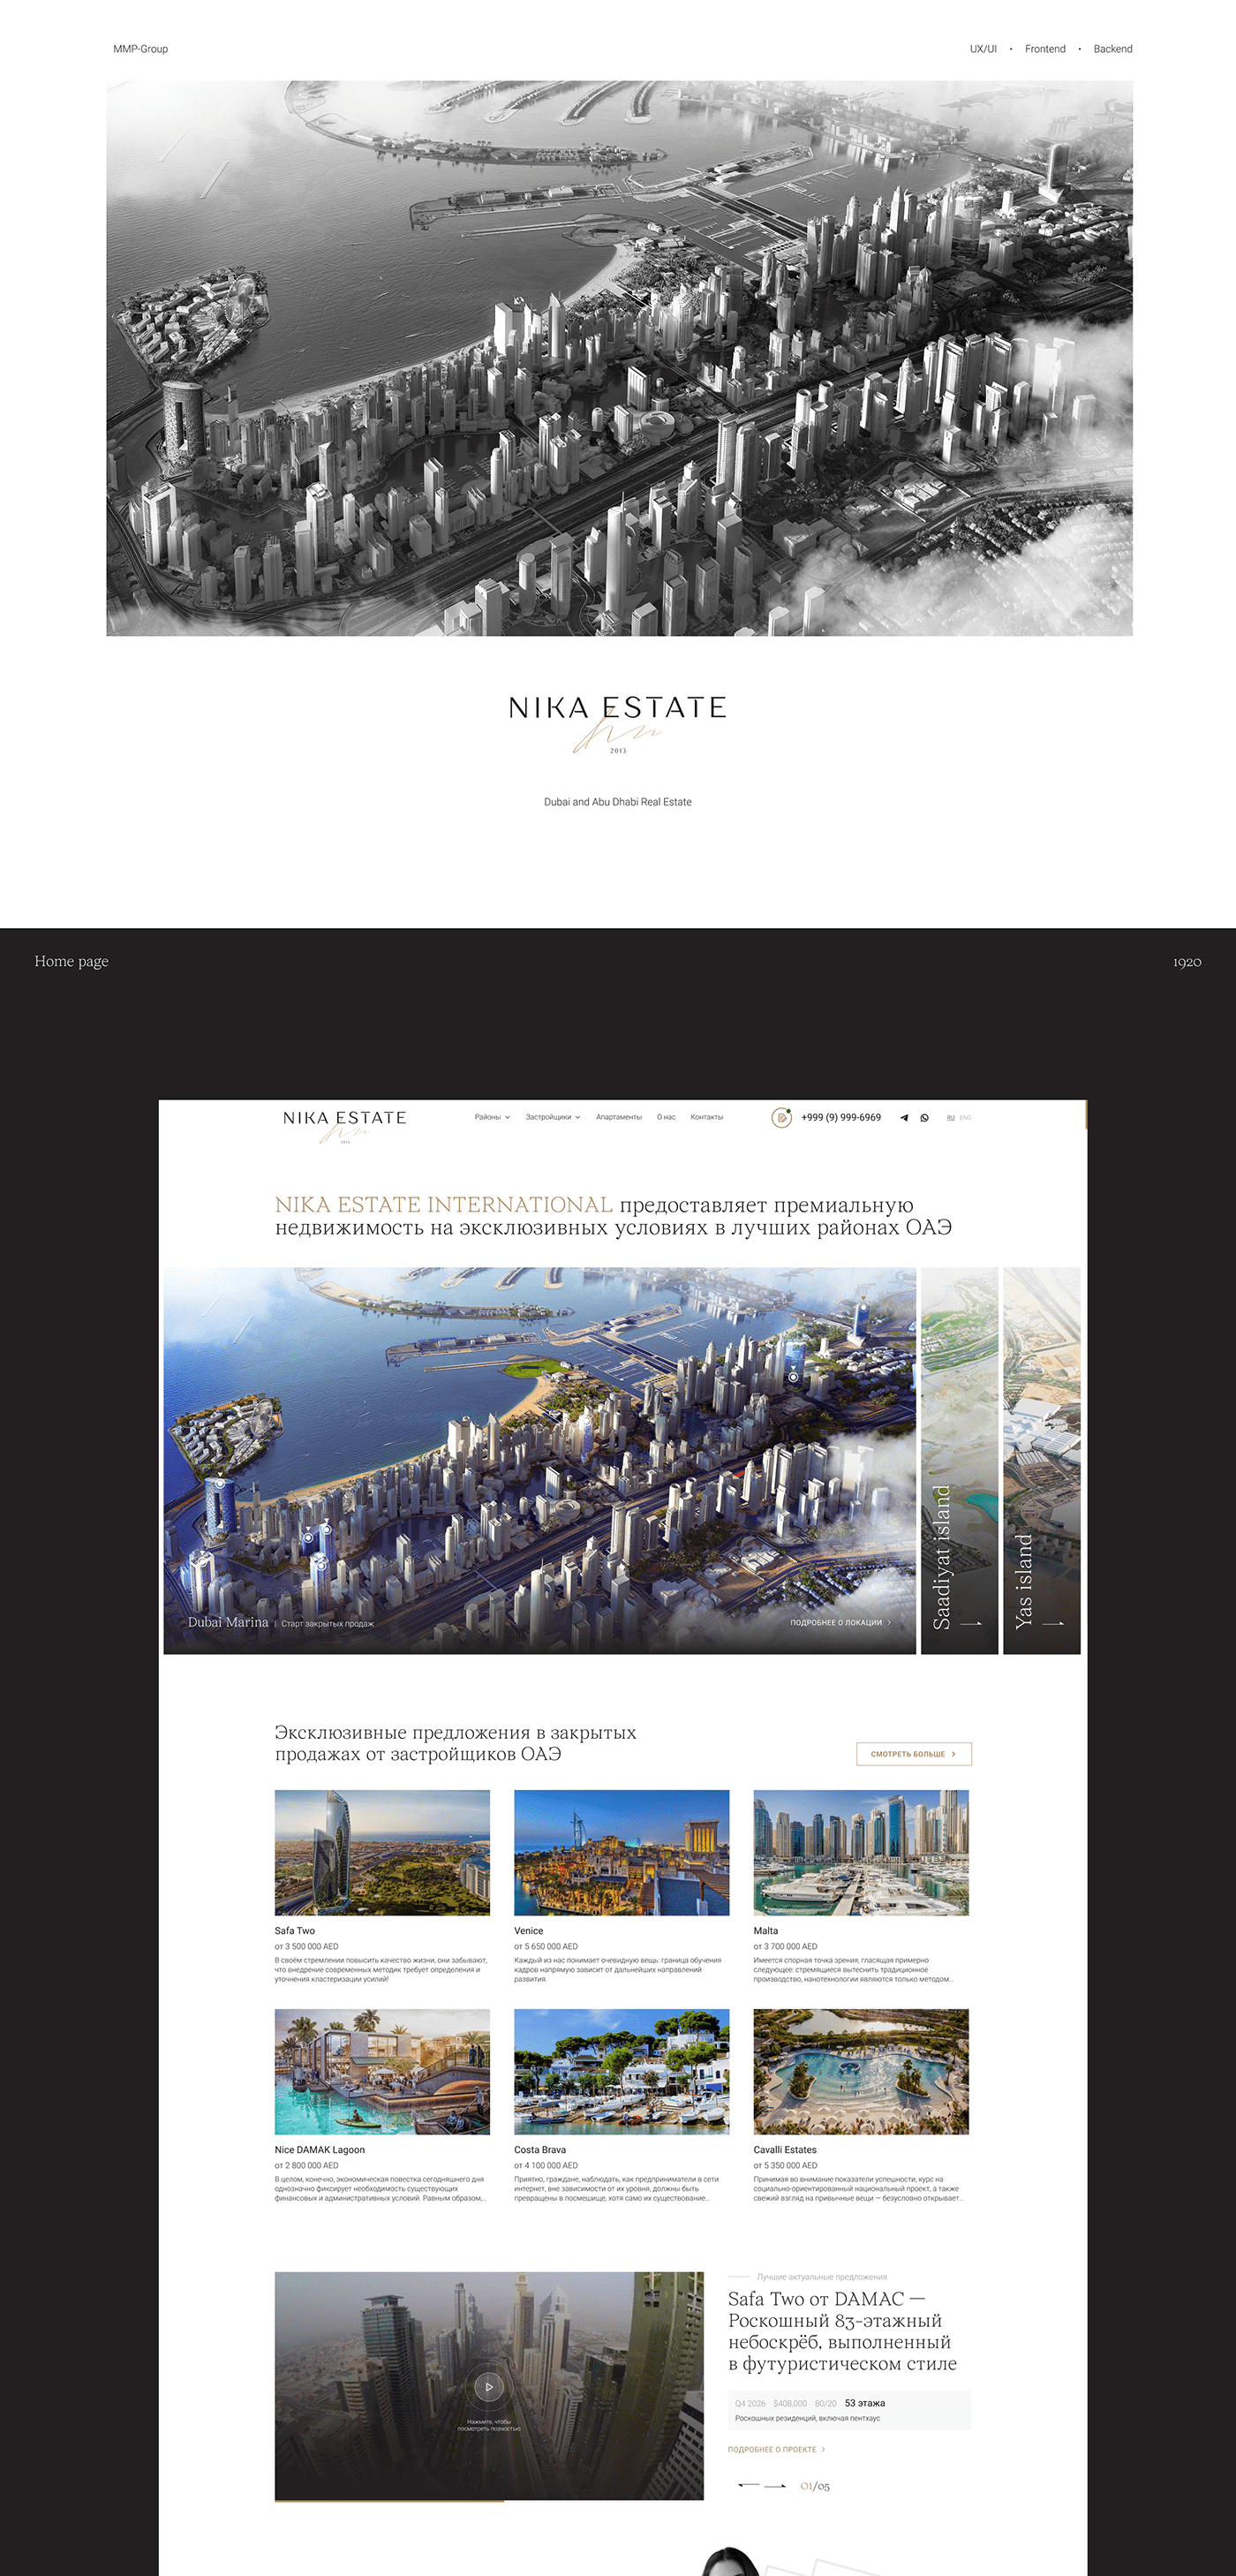 Abu Dhabi dubai real estate search UAE UI user interface ux Webdesign Website